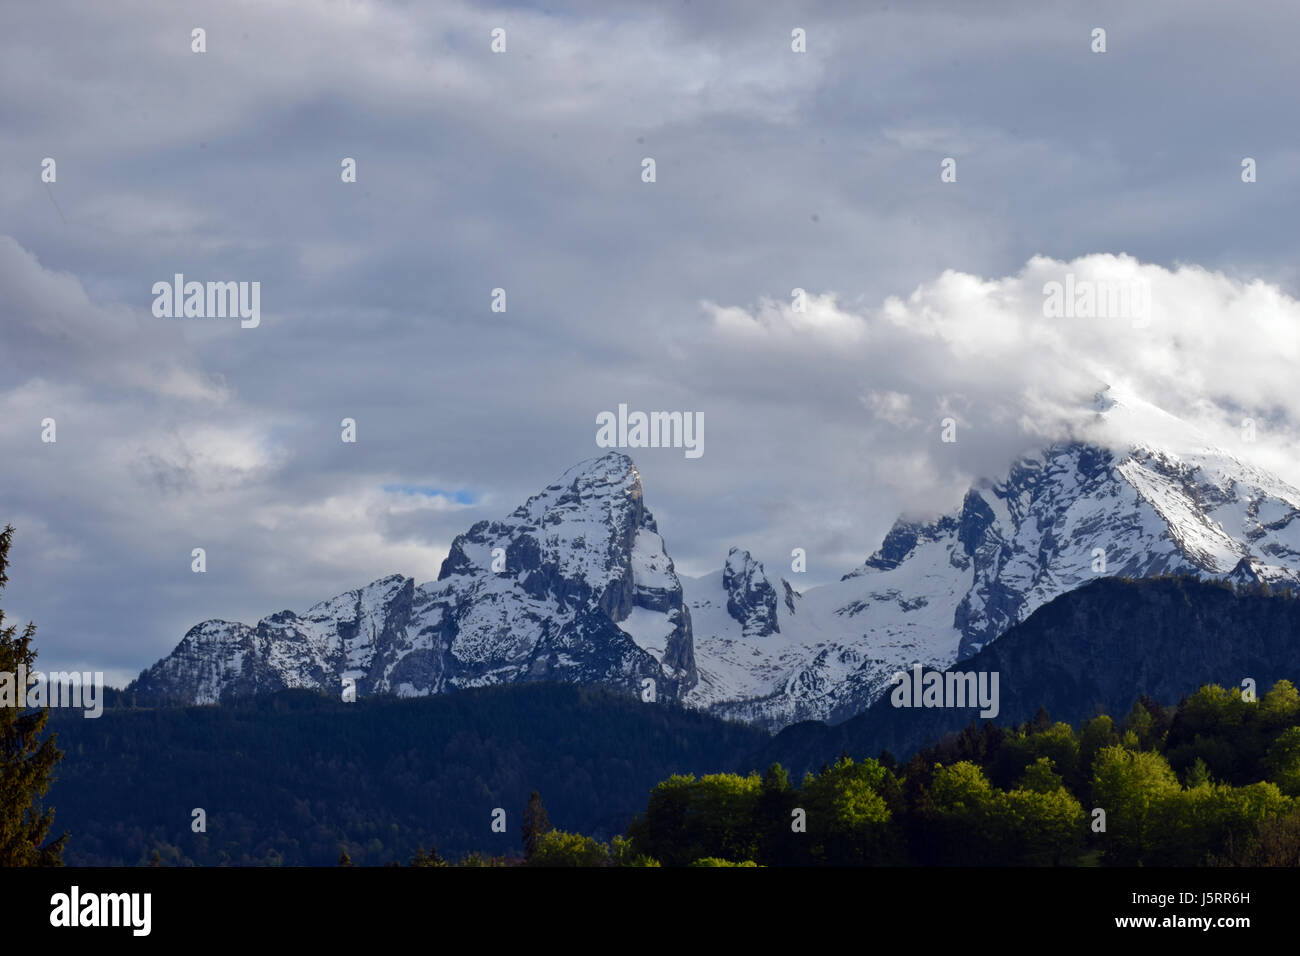 Alps mountain from Berchtesgaden, Bavaria, Germany. Stock Photo